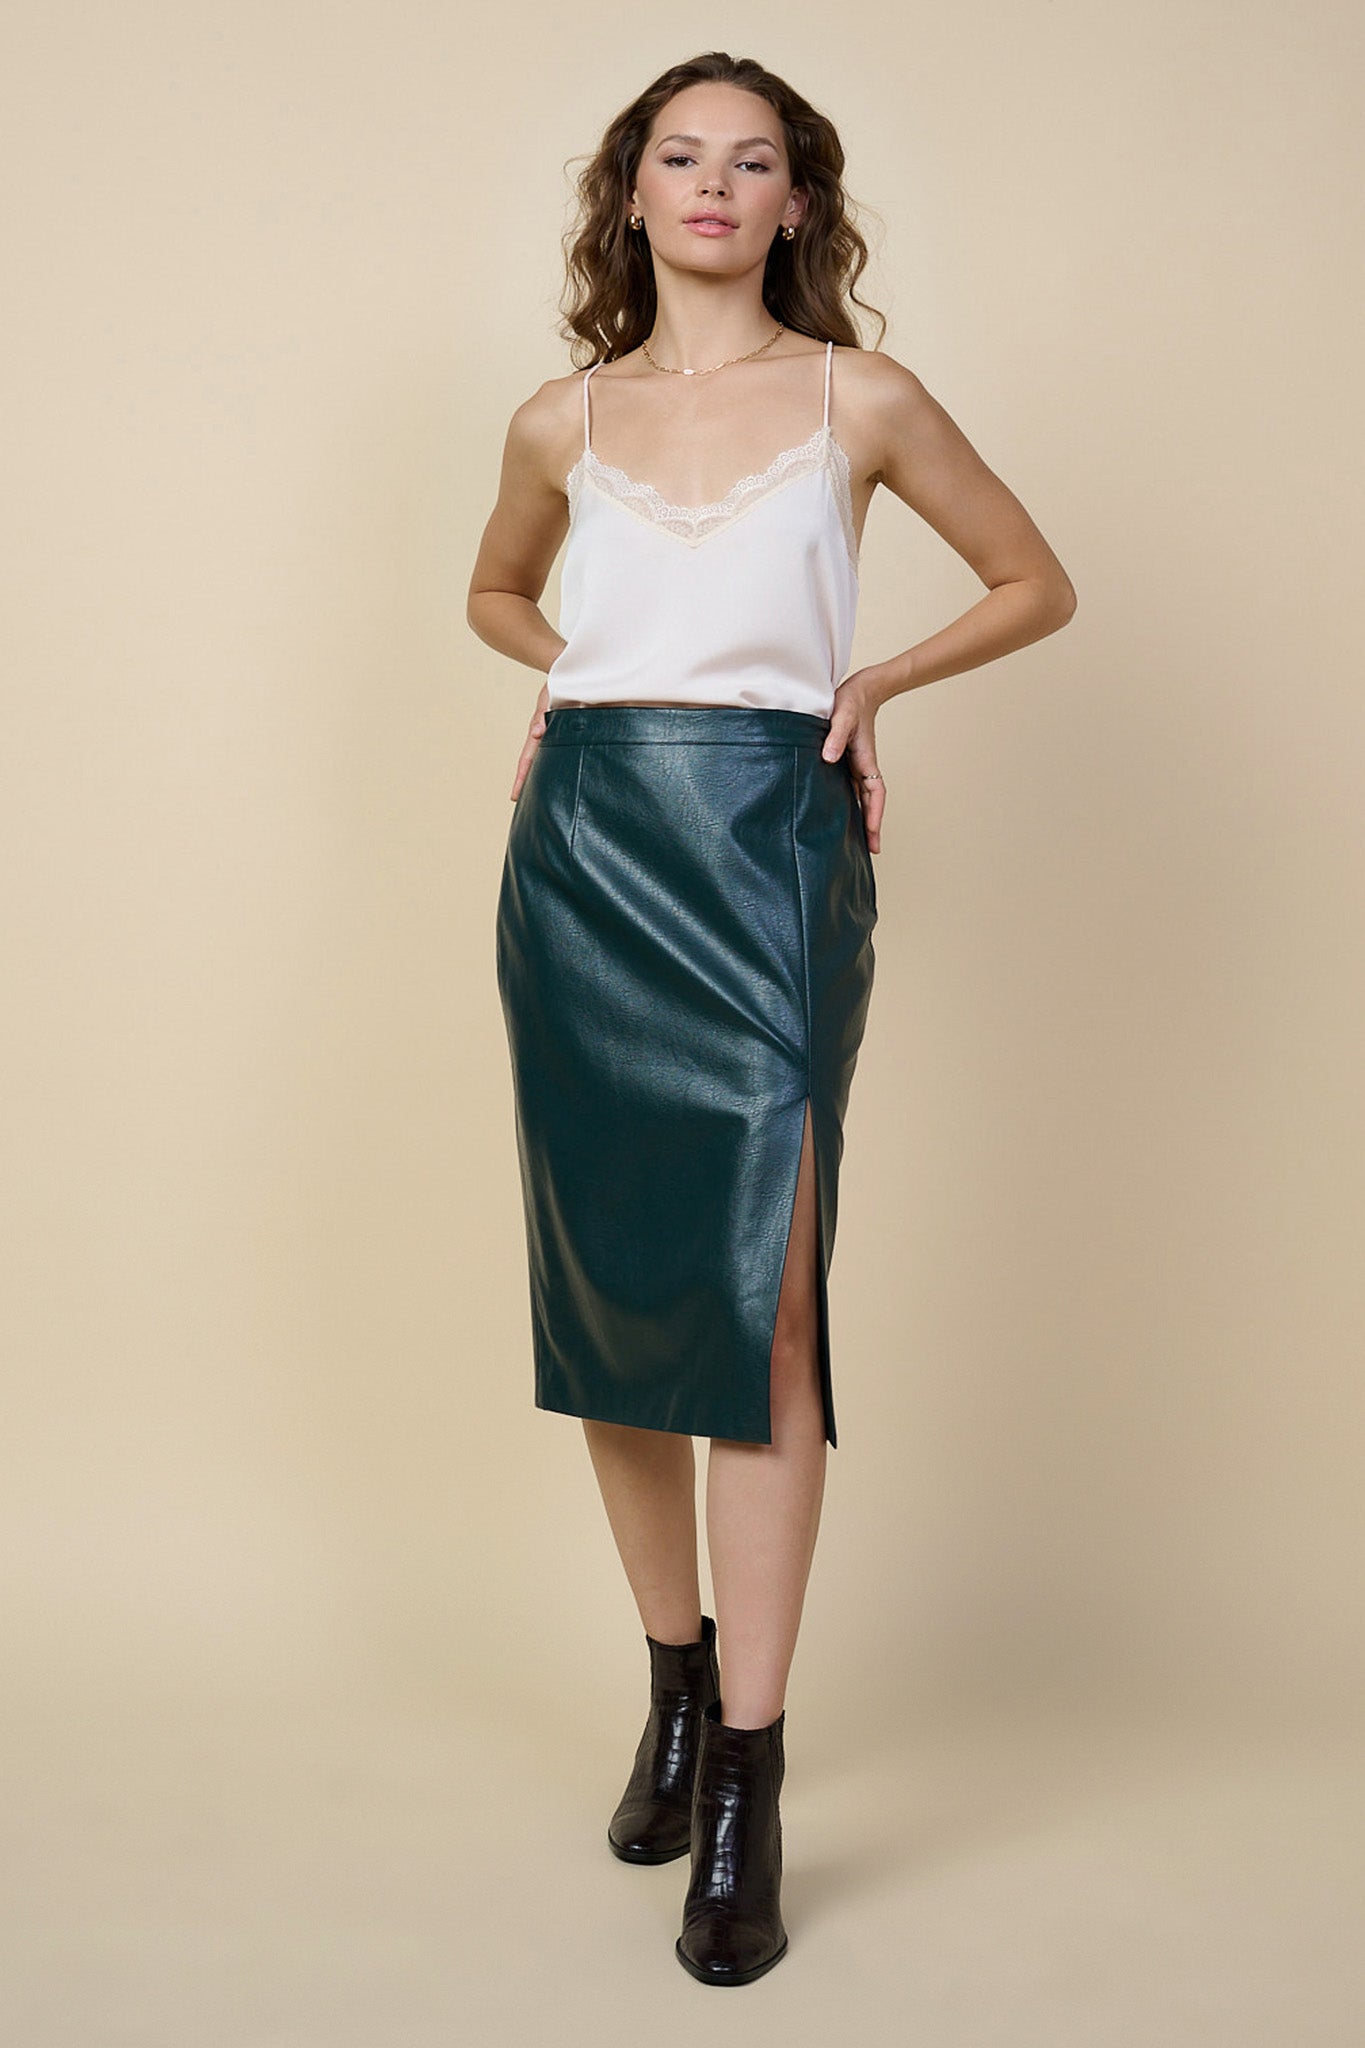 Hugo Boss Green Leather Skirt-Meghan Markle - Dress Like A Duchess